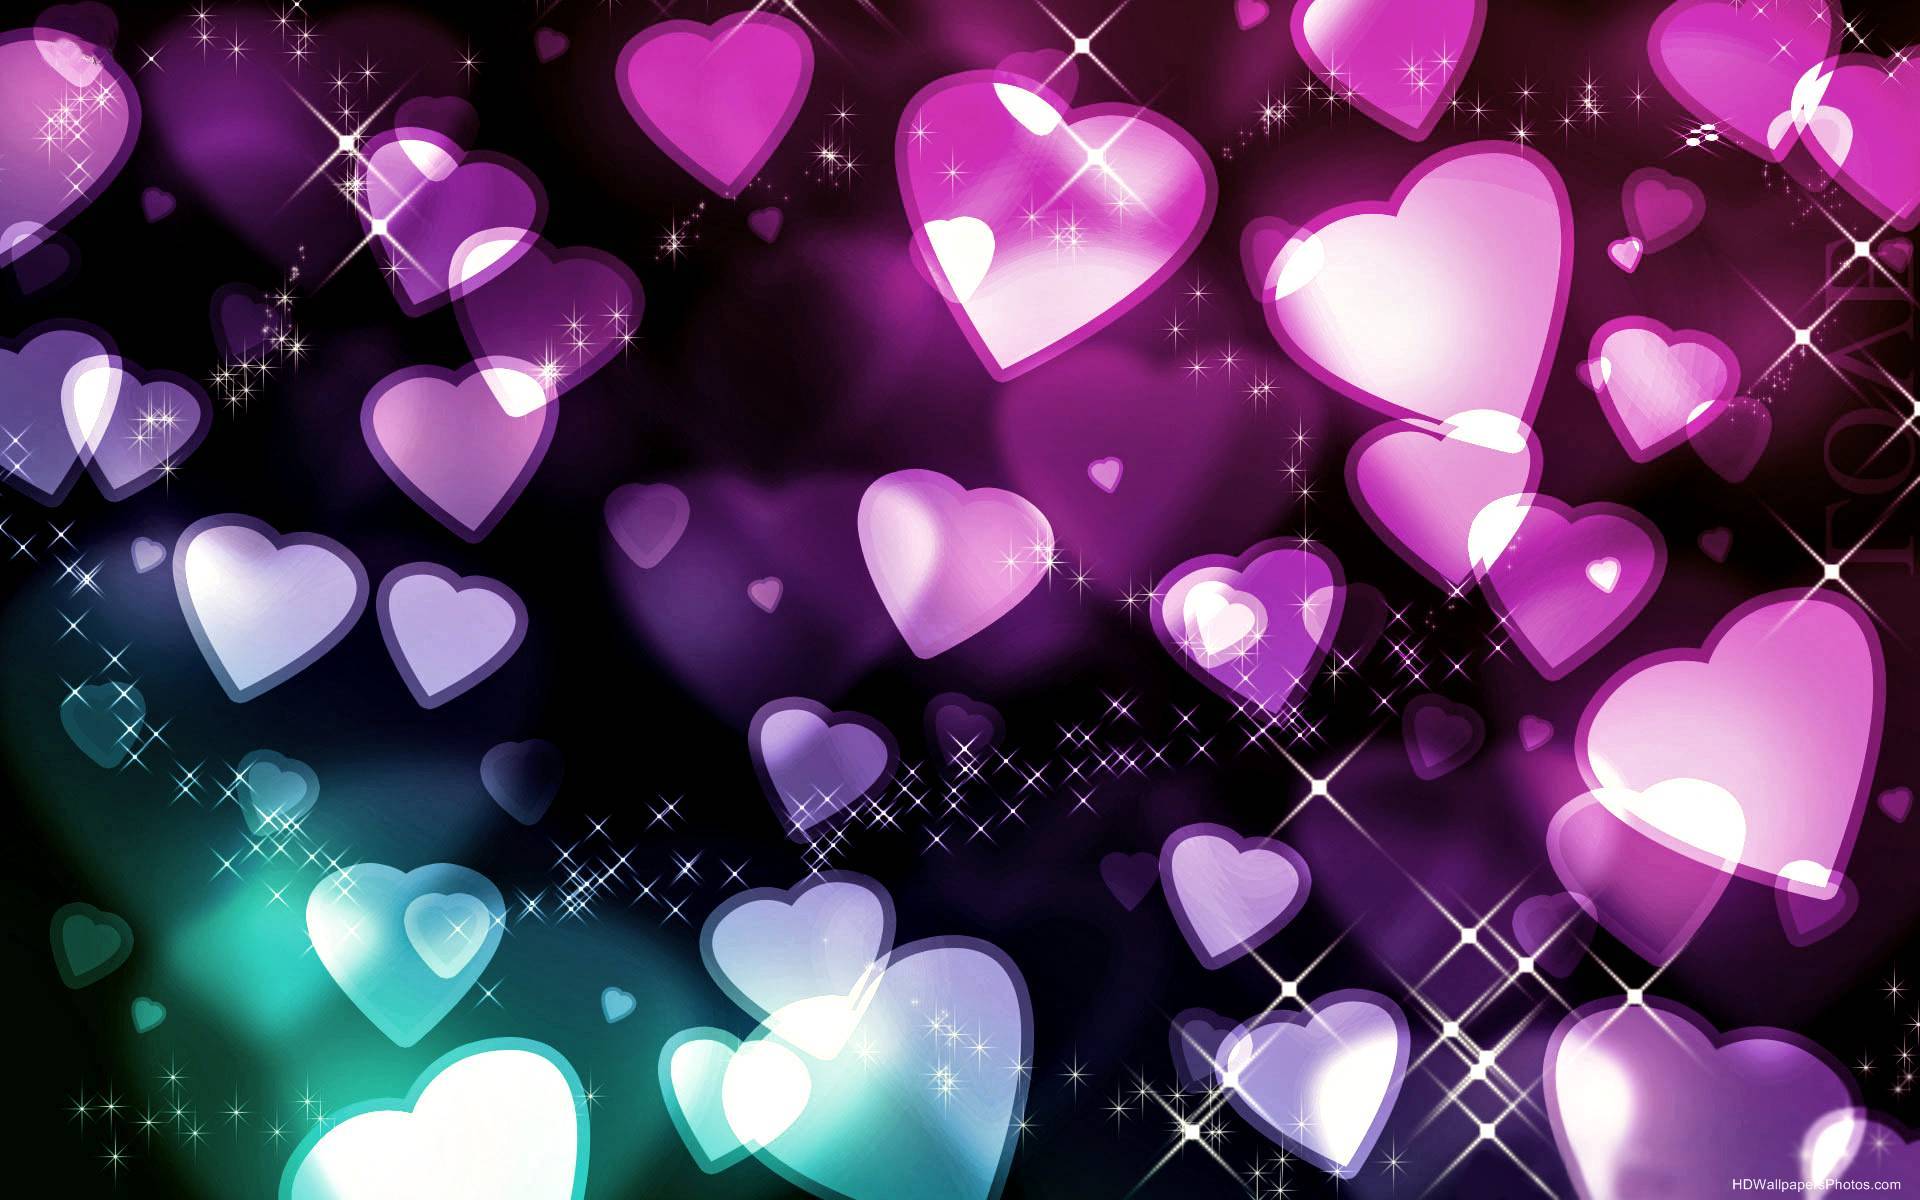 Colorful Hearts HD Wallpaper Photos